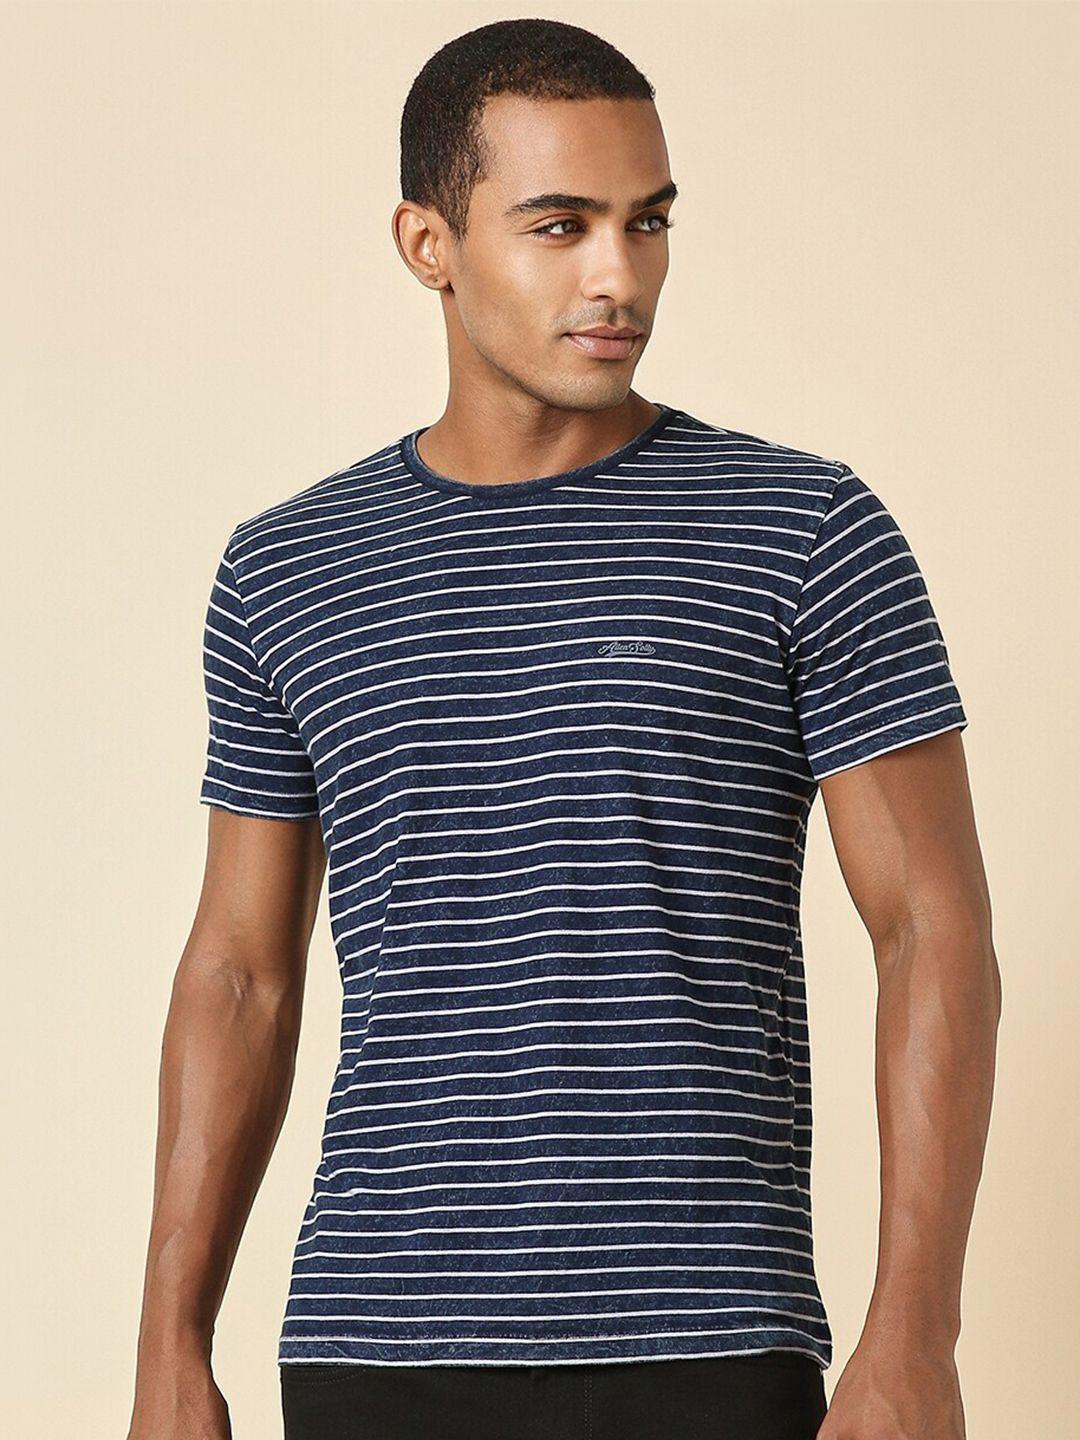 allen-solly-striped-slim-fit-pure-cotton-t-shirt